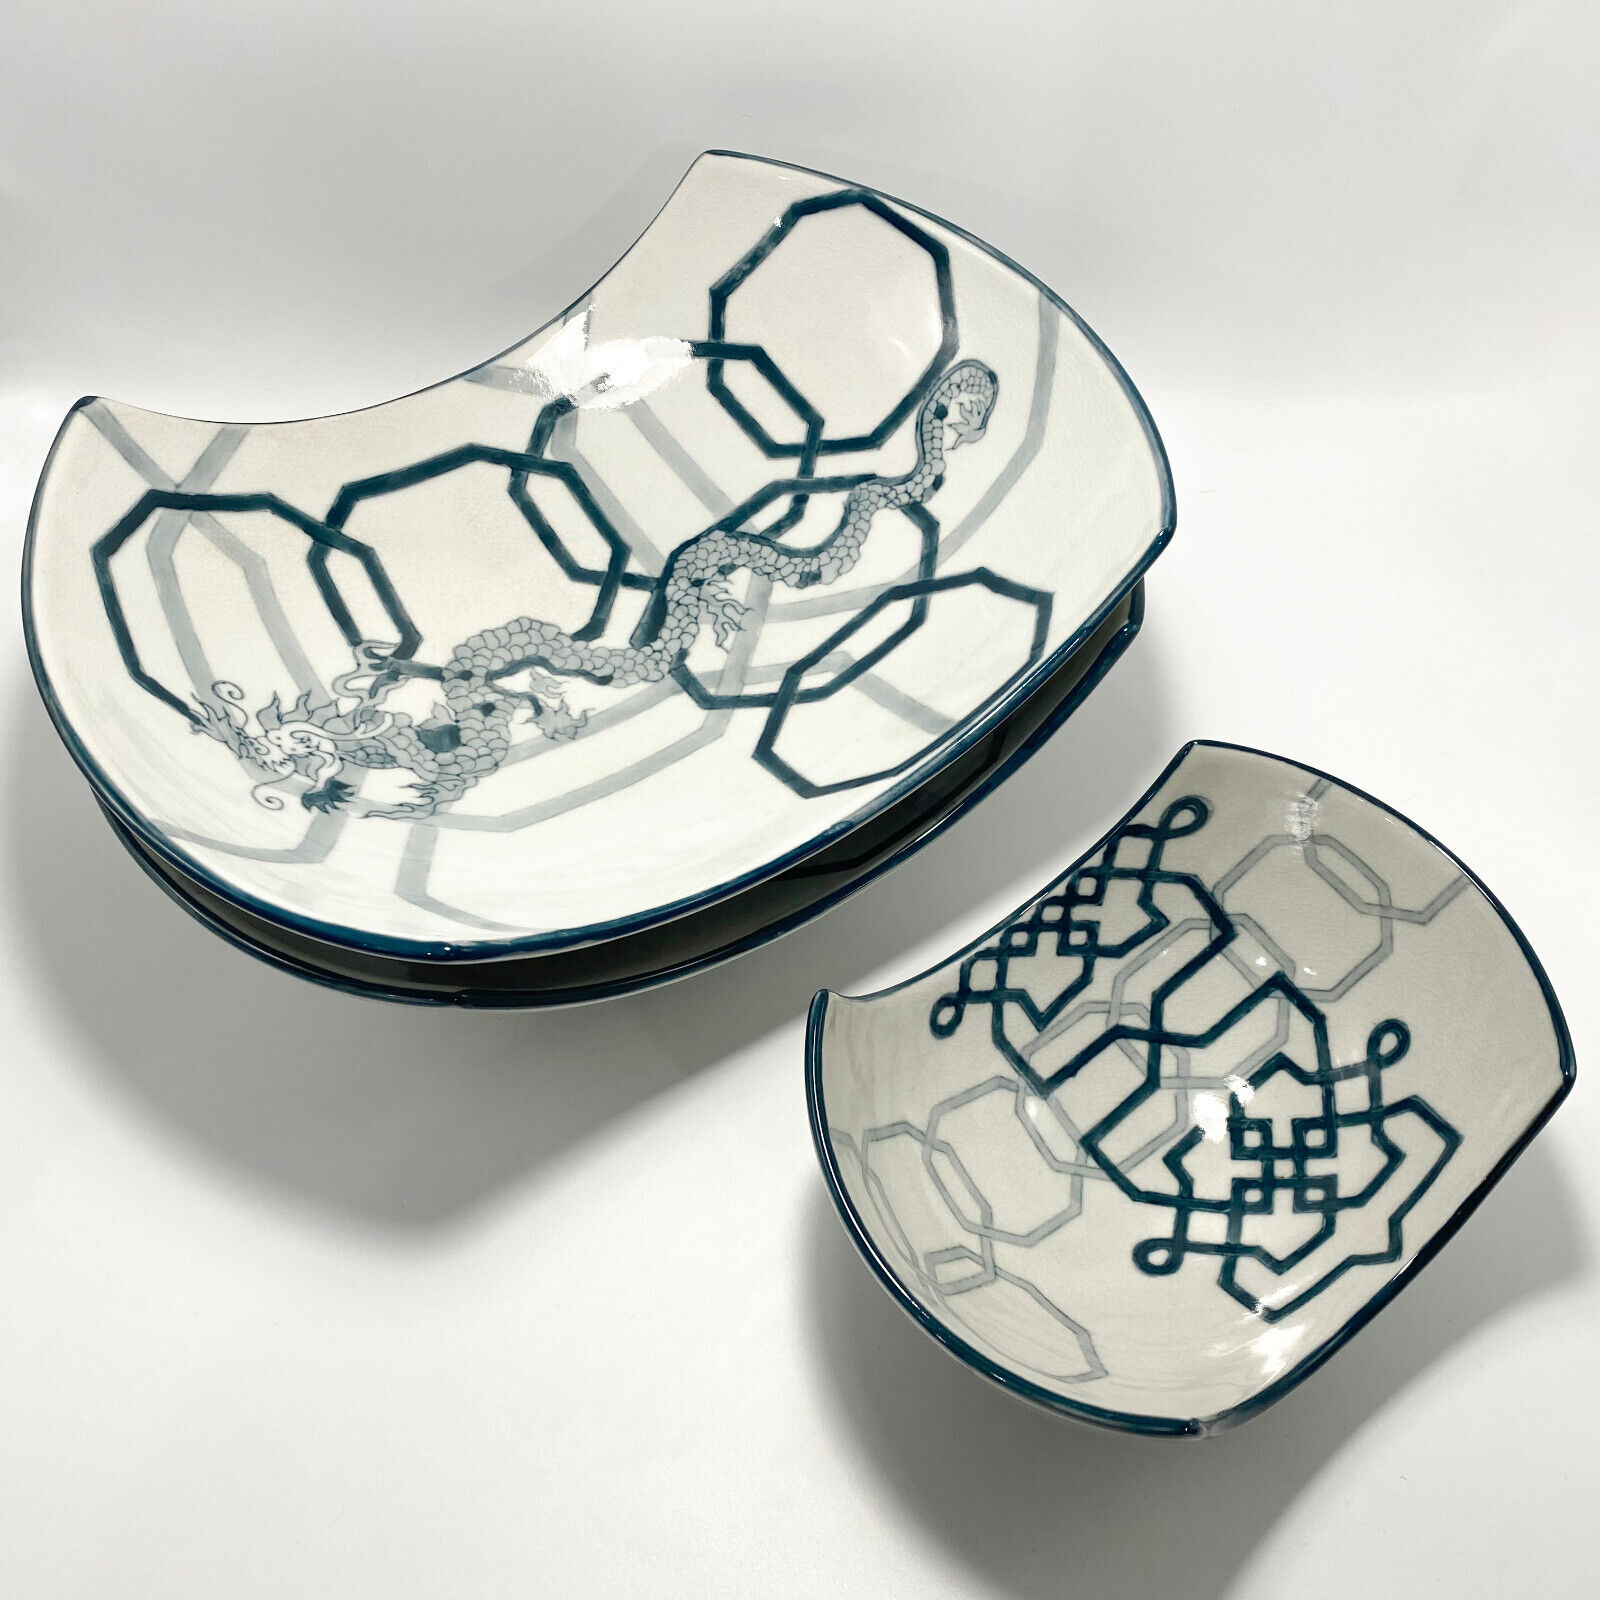 BOMBAY COMPANY Vintage Set of 3 Curved Decor Bowls - Teal Dragon & Lattice Motif